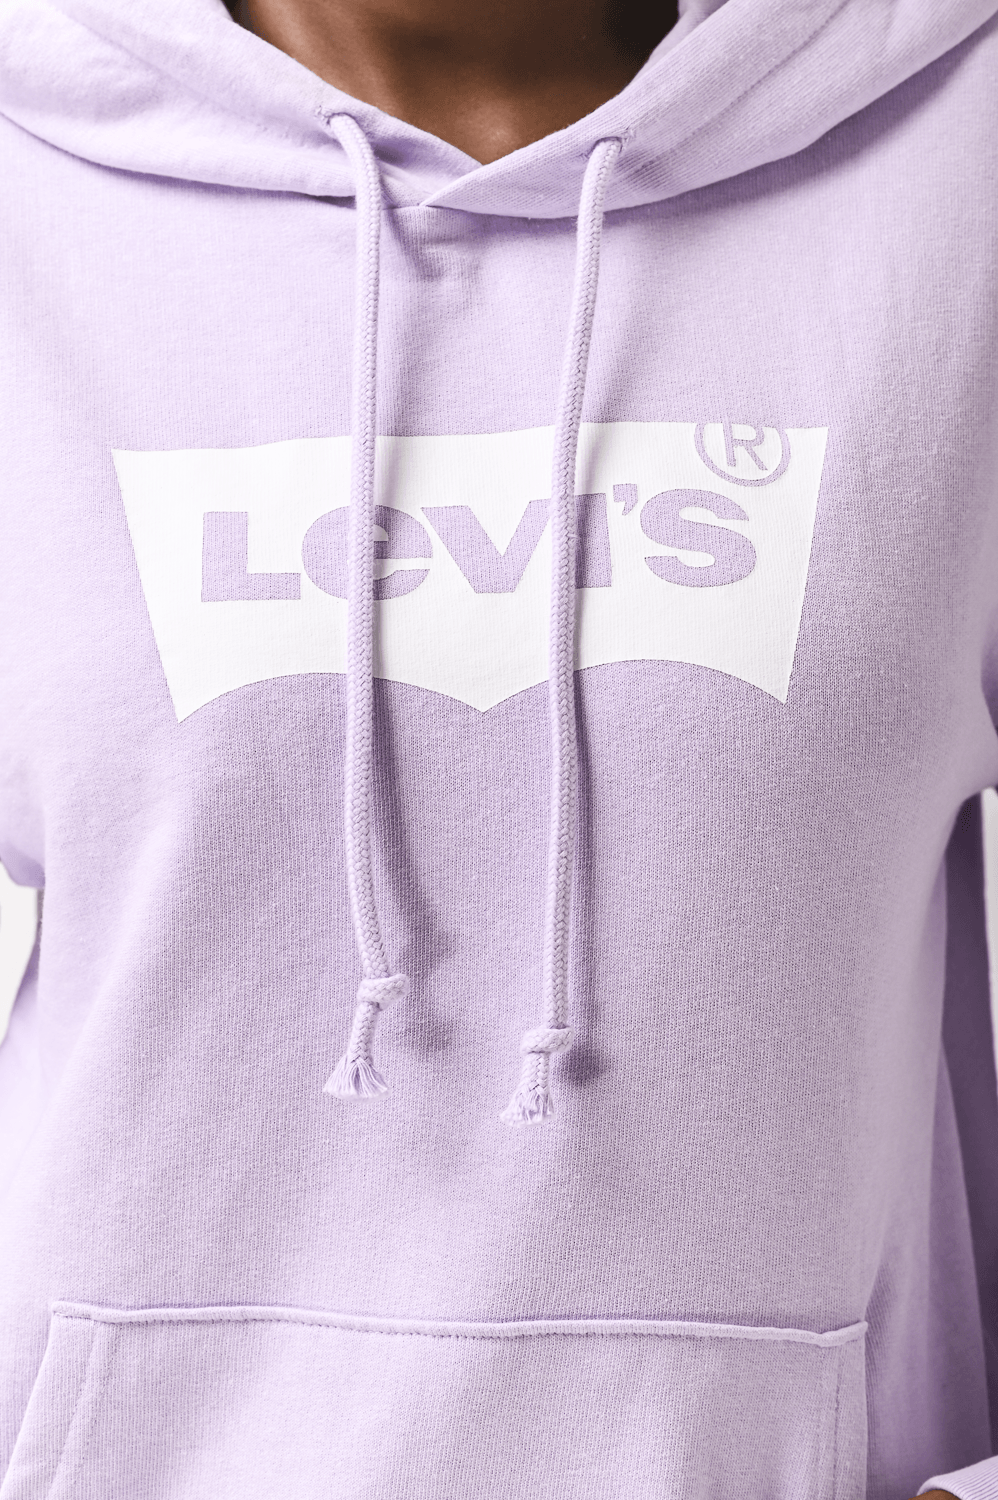 LEVI'S - סווטשירט GRAPHIC STANDARD צבע לילך - MASHBIR//365